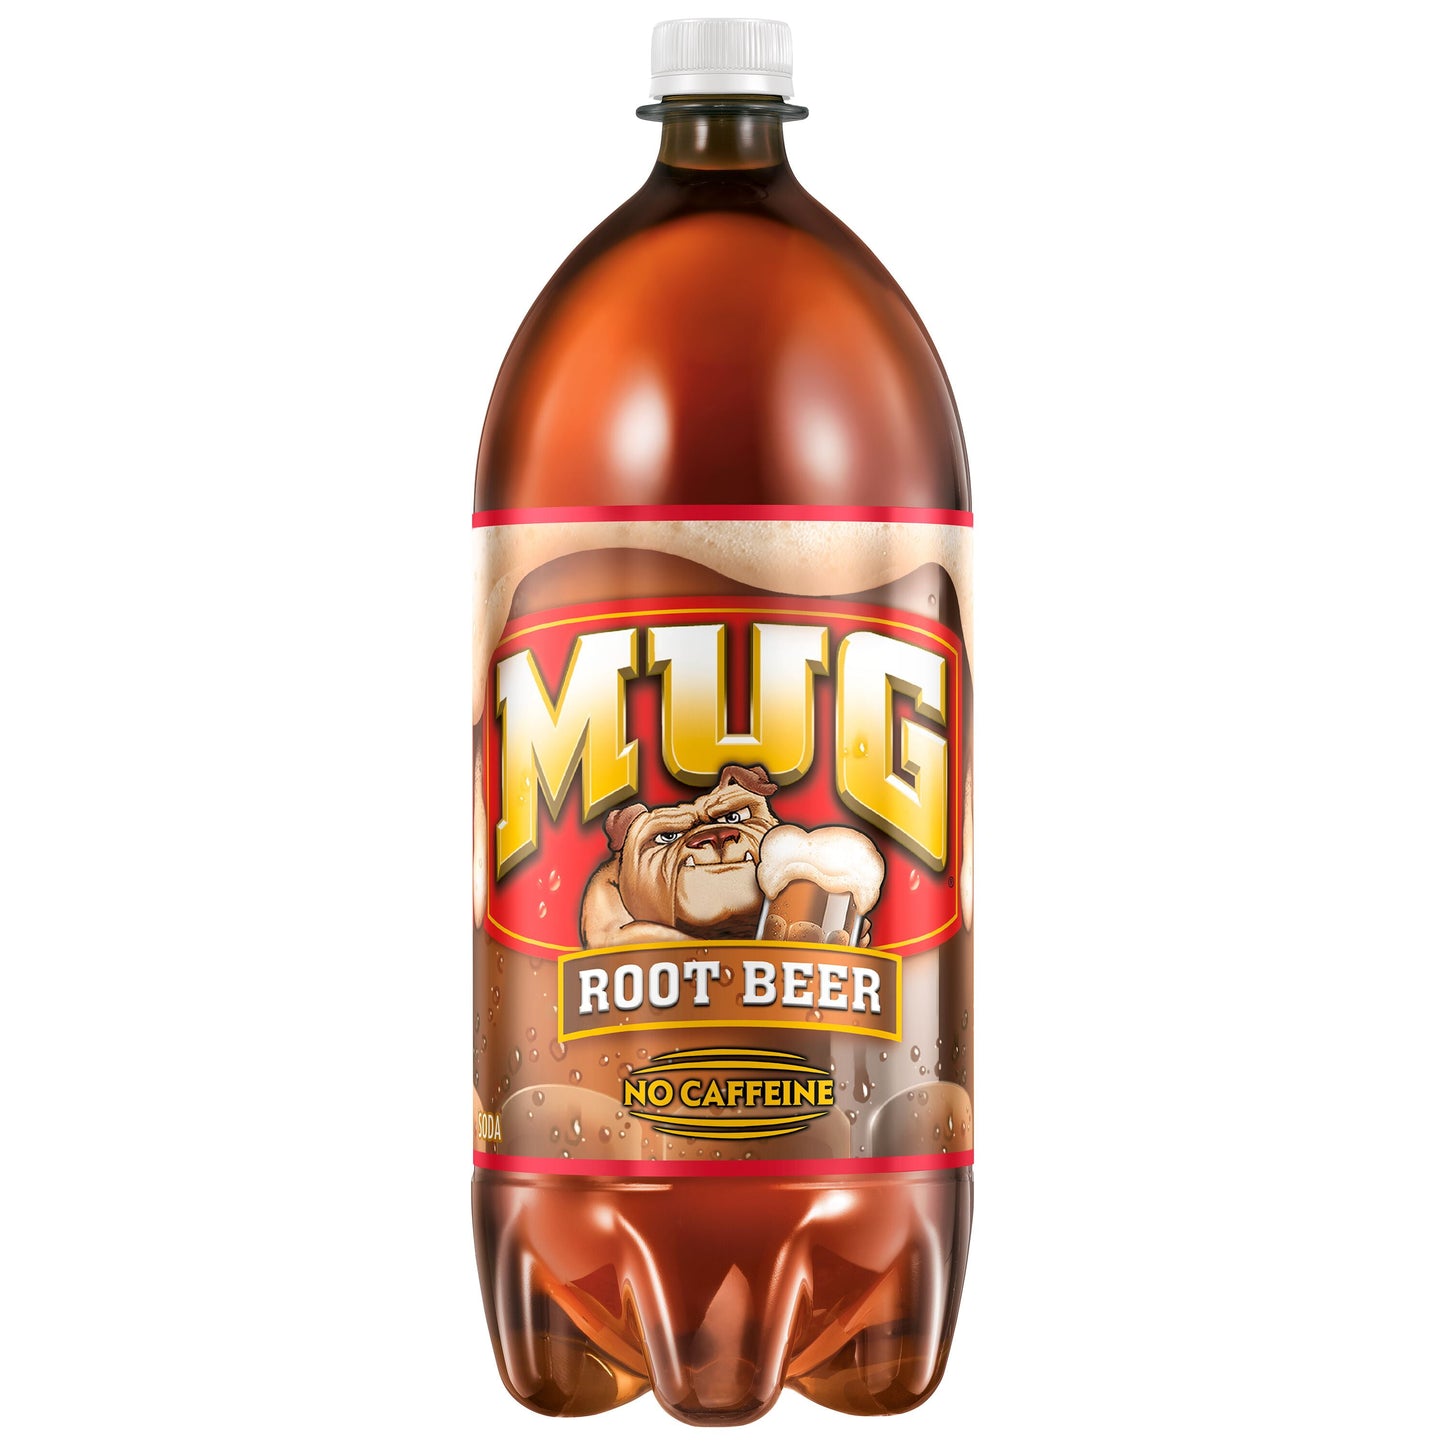 Mug Root Beer Caffeine Free Soda Pop, 2 Liter Bottle